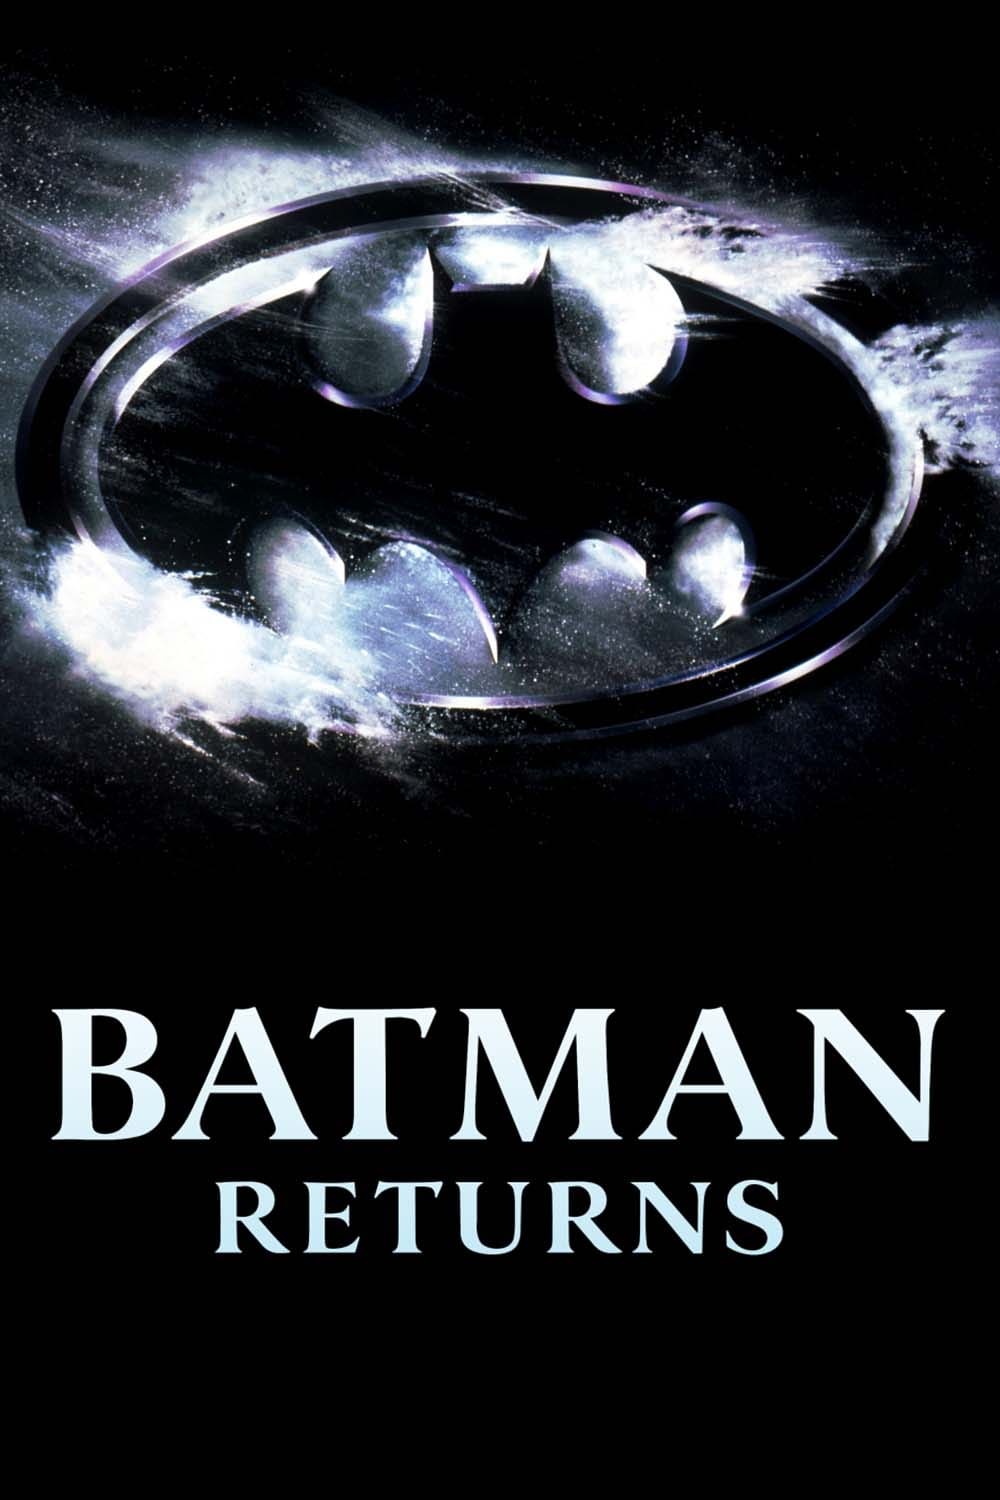 1992 Batman Returns